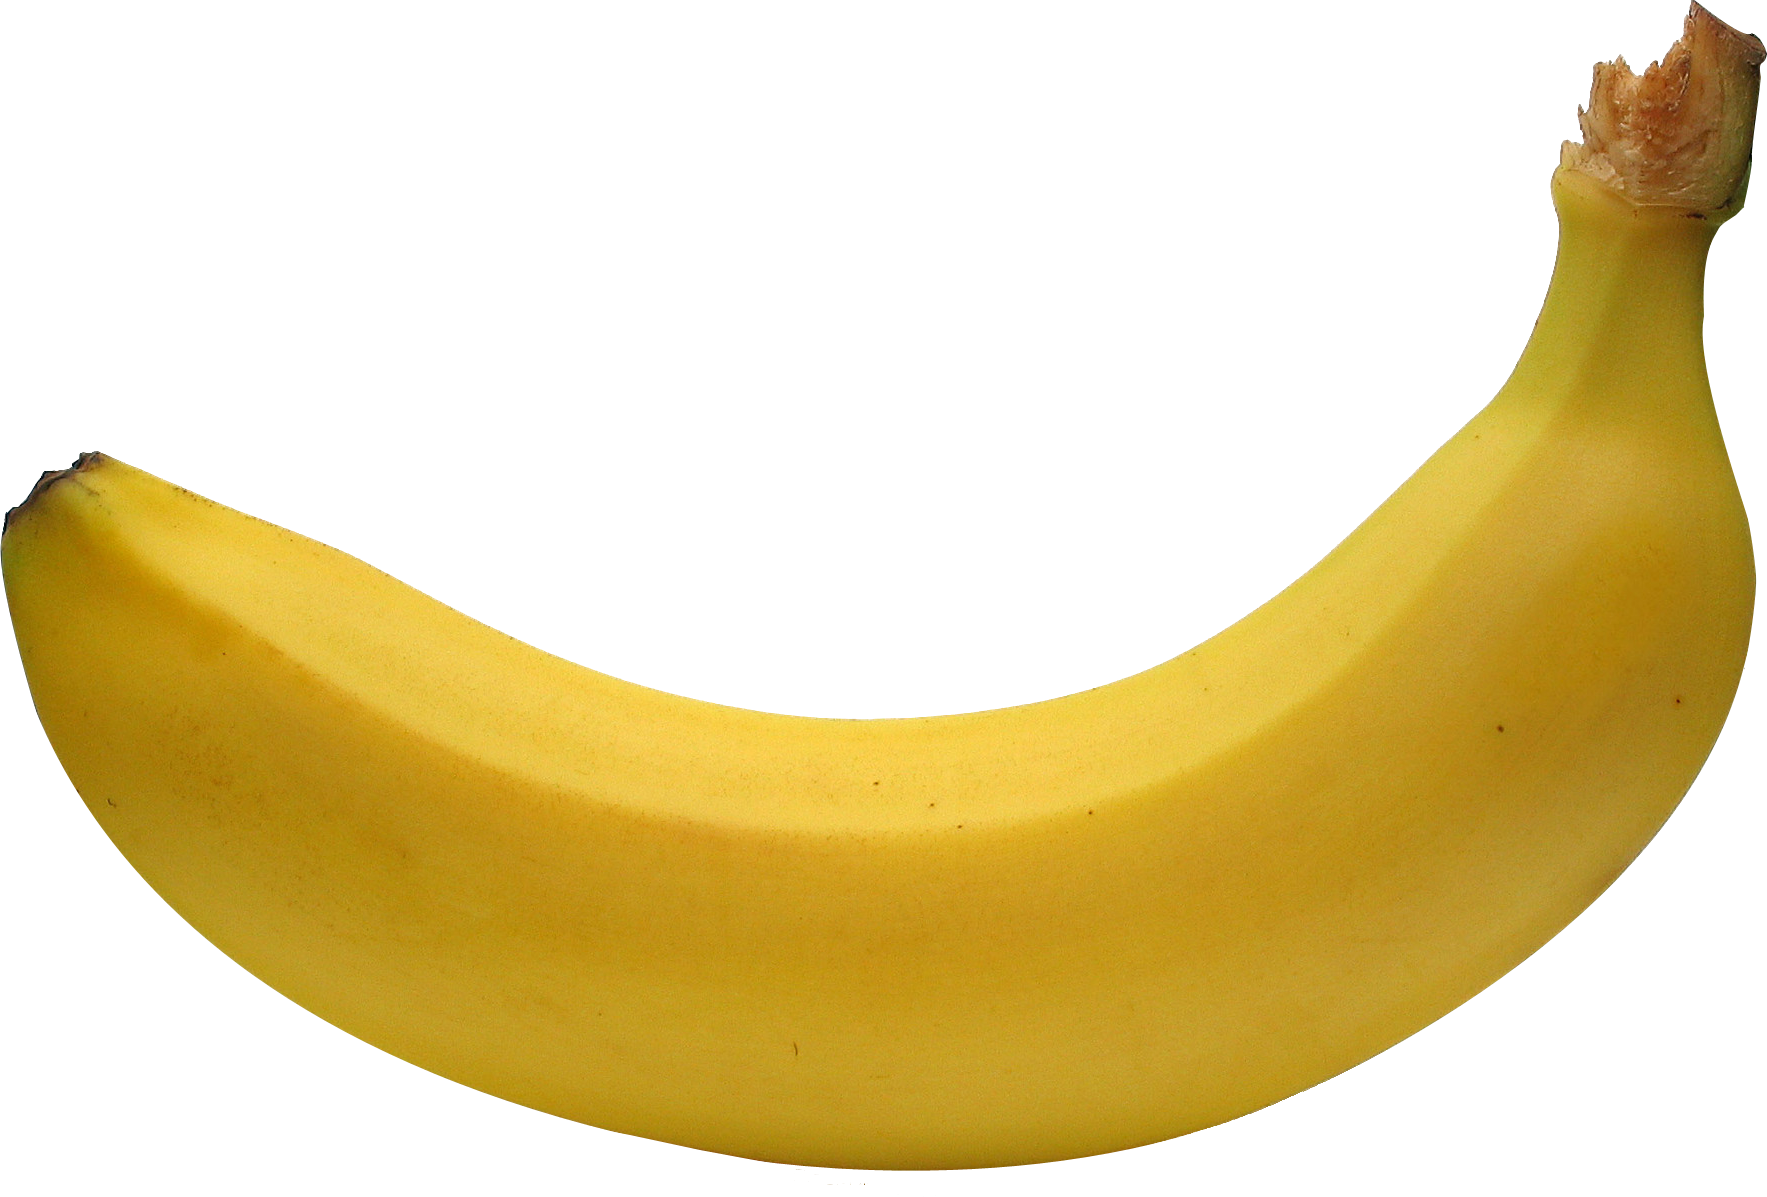 Banana HD wallpapers, Desktop wallpaper - most viewed